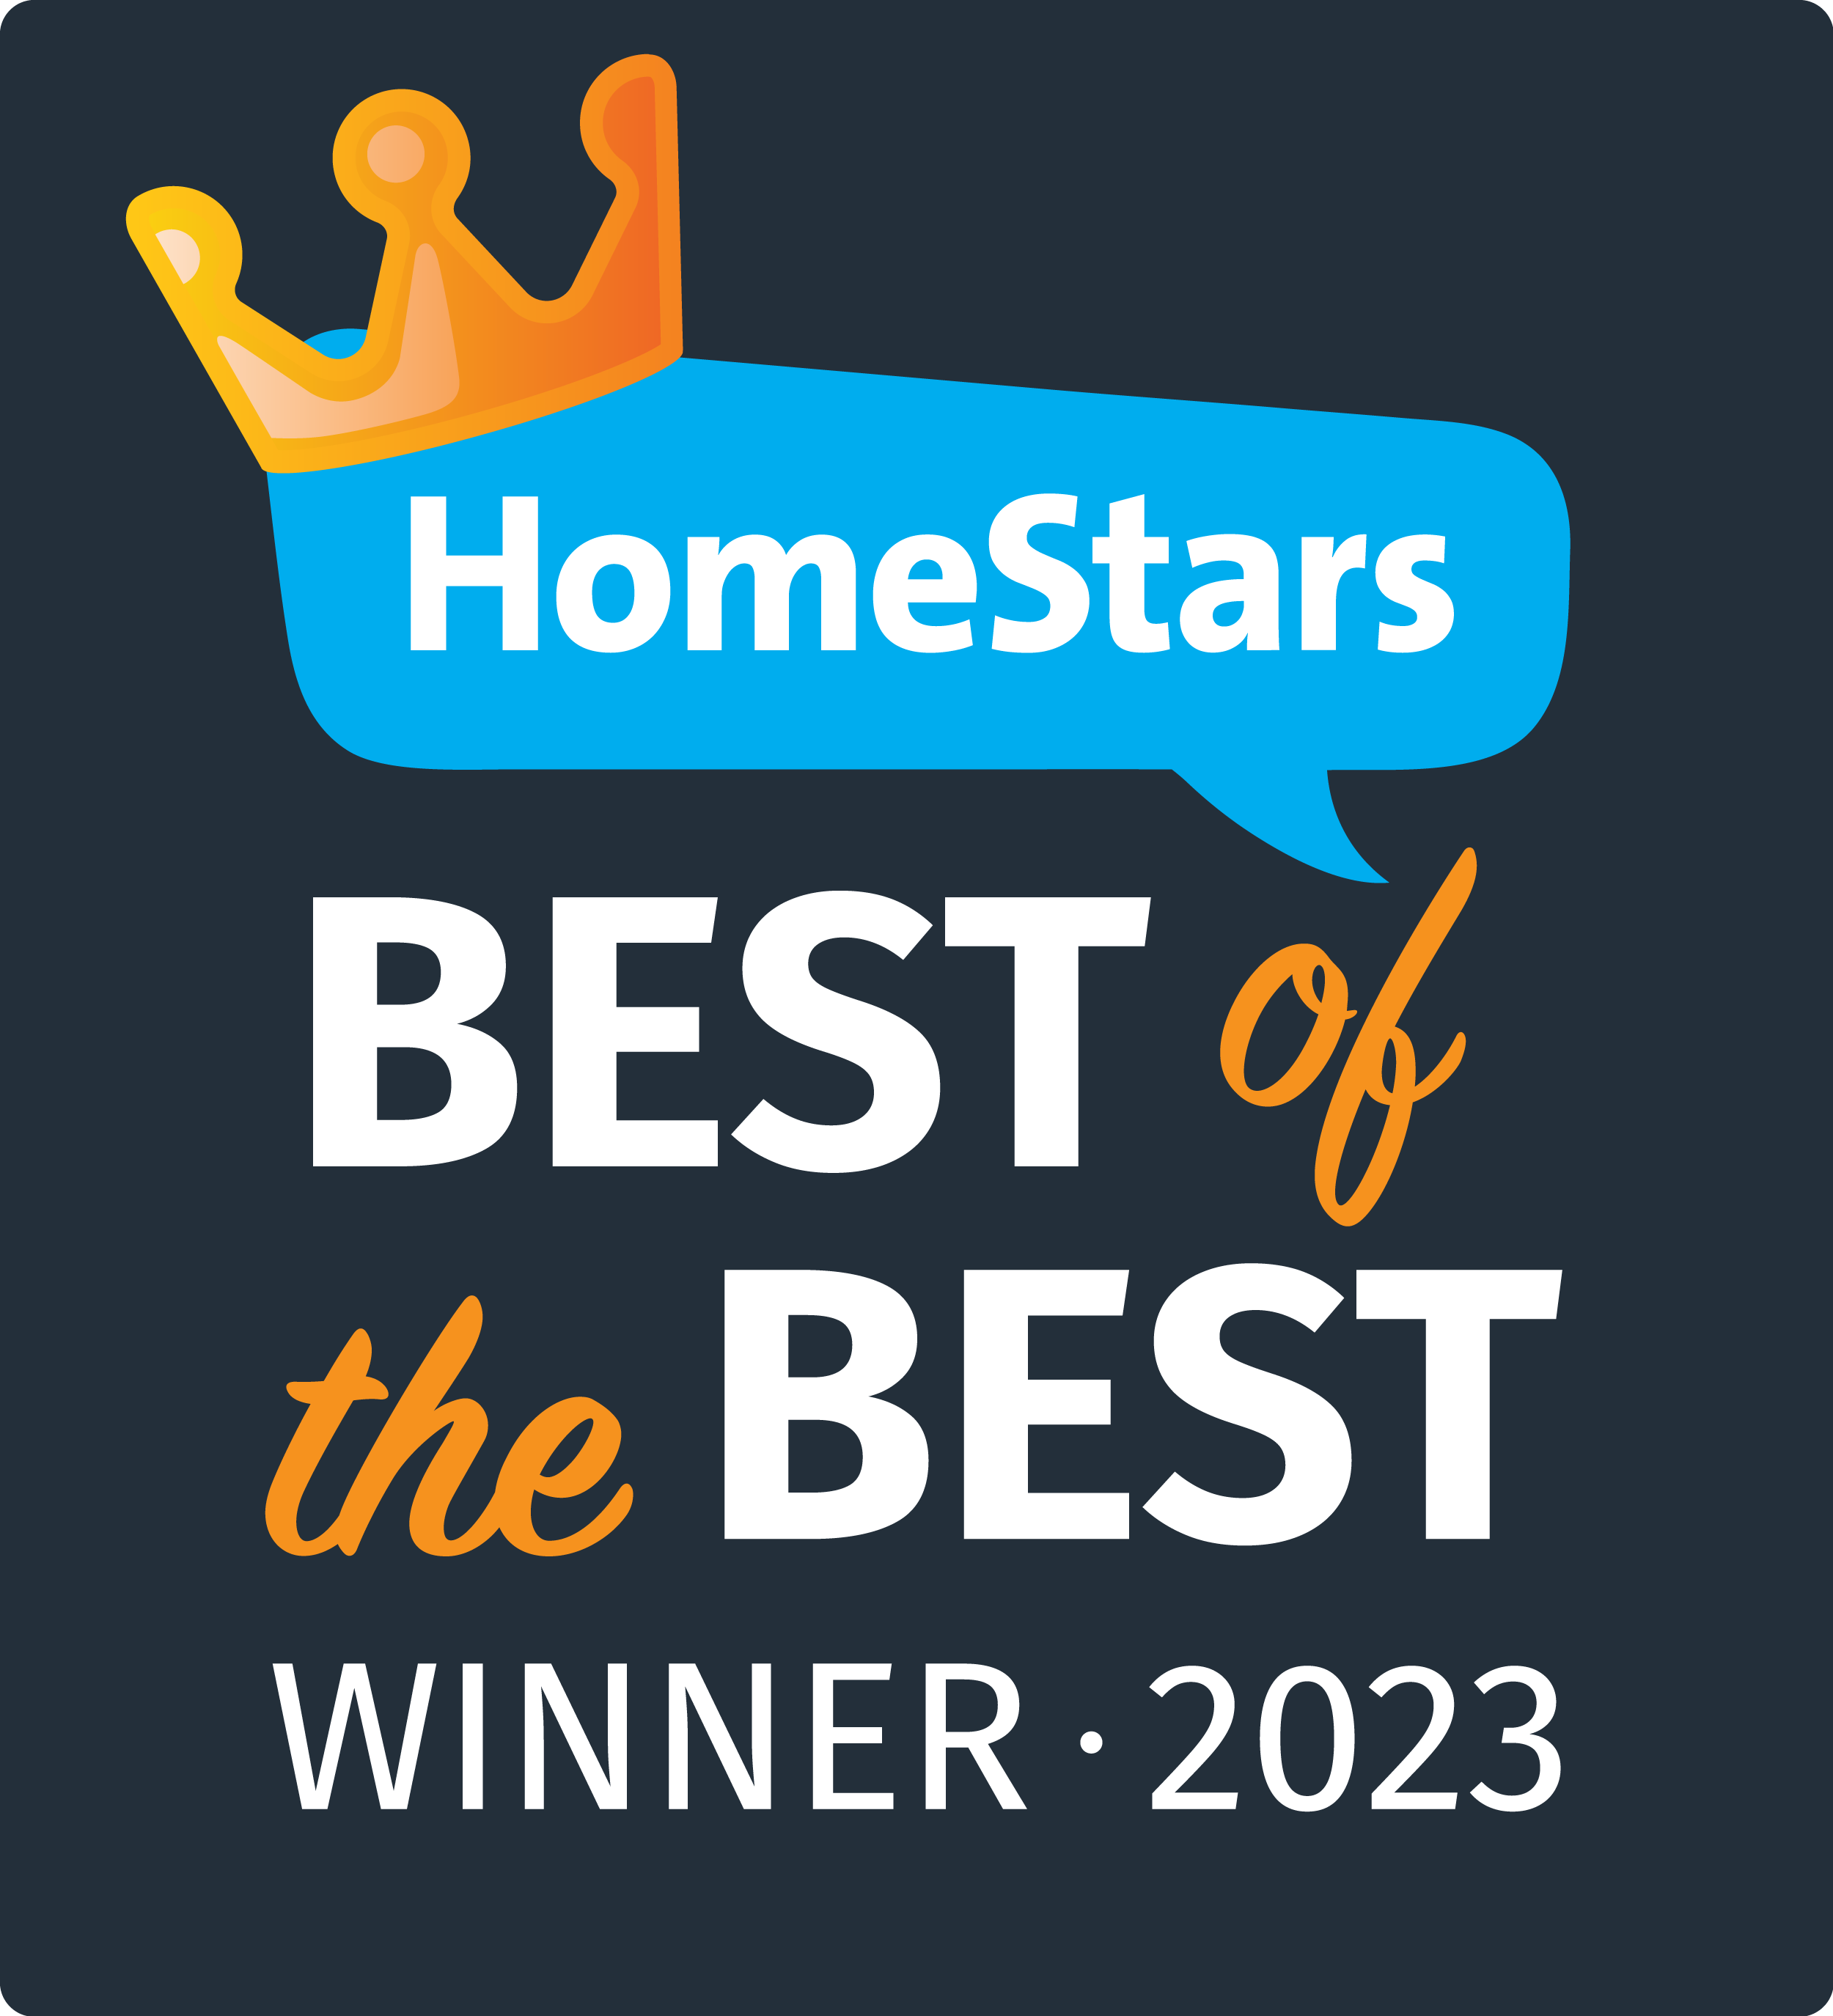 HomesSars Best of the Best award 2023